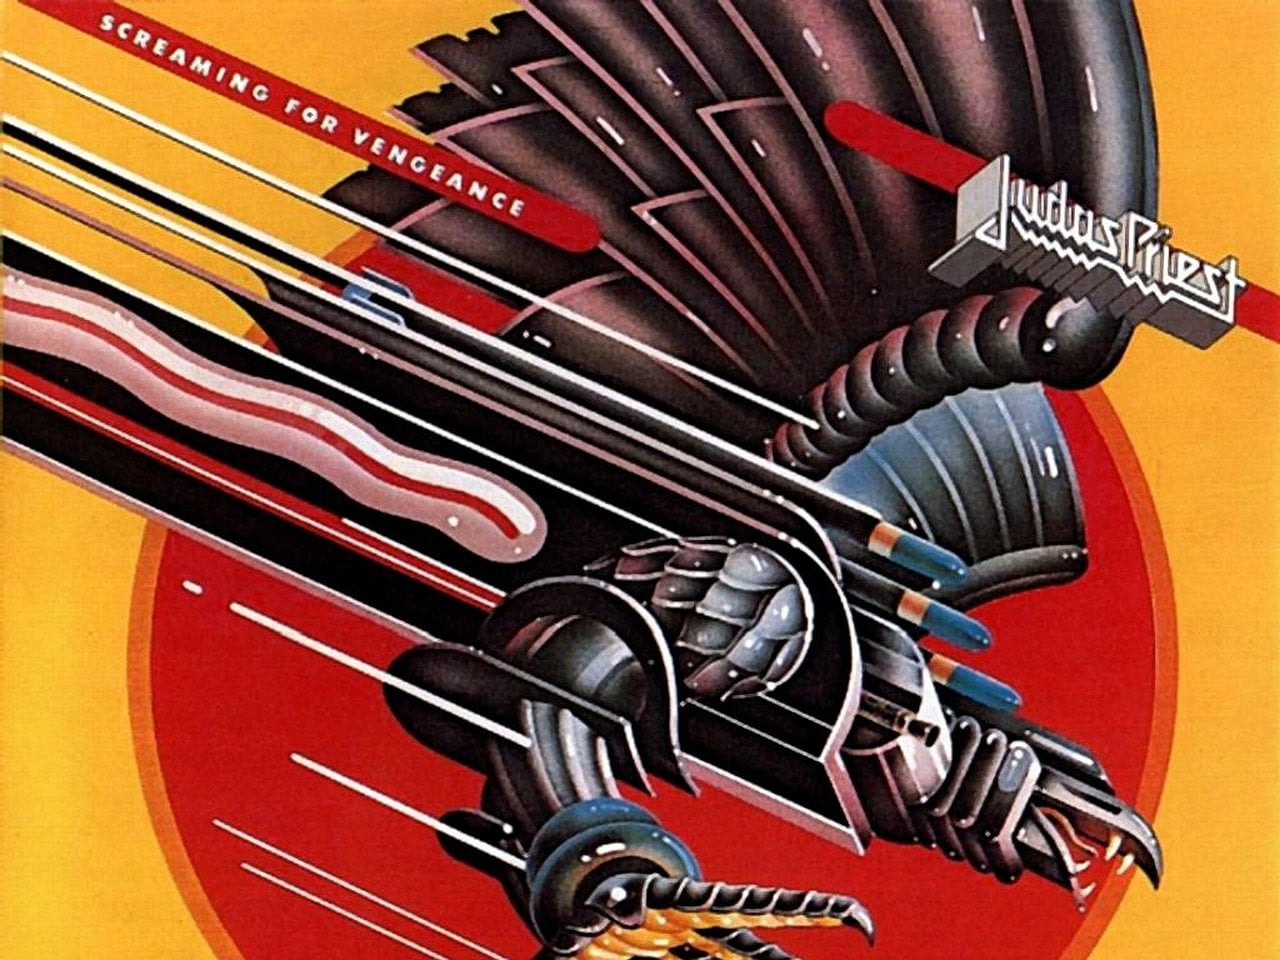 Judas Priest Scream for Vengeance album art, Band (Music), close-up